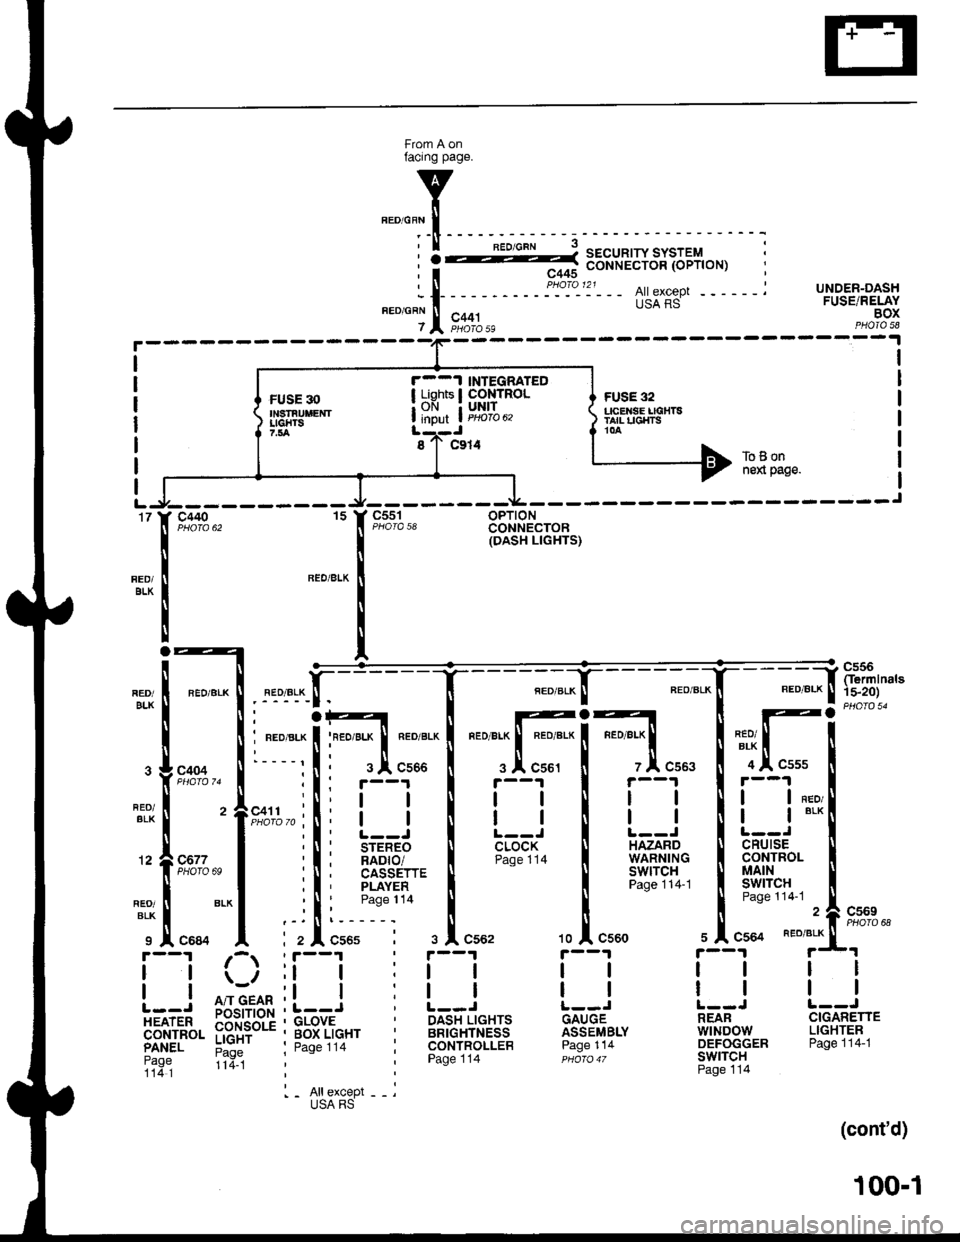 HONDA INTEGRA 1998 4.G User Guide UNDER-DASHFUSE/RELAYBOX
15 Y C551OPTIONCONNECTOR(DASH LTGHTS)
c440t7
FED/BLX
| | neor
| | sLK
CRUISECONTROLMAINswtTcHPage 114-1
".o "," ! . uu.*-[------]f 
----;
c4.4 li,irlffi",;:^l 
*Tf
-.l--,,il